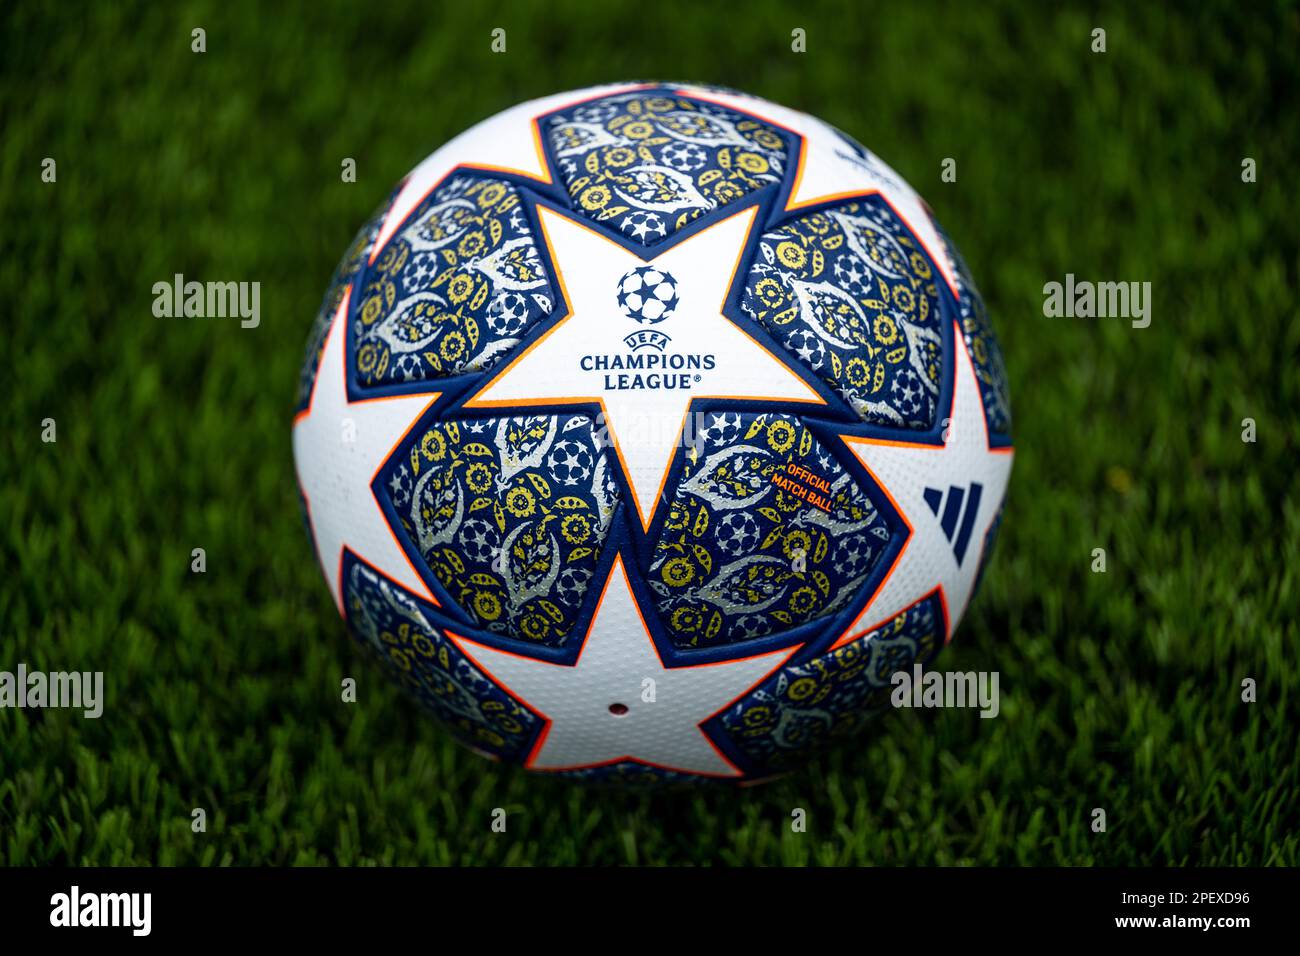 Ballon de Football Adidas Ligue des Champions 2023/2024 Match ADIDAS